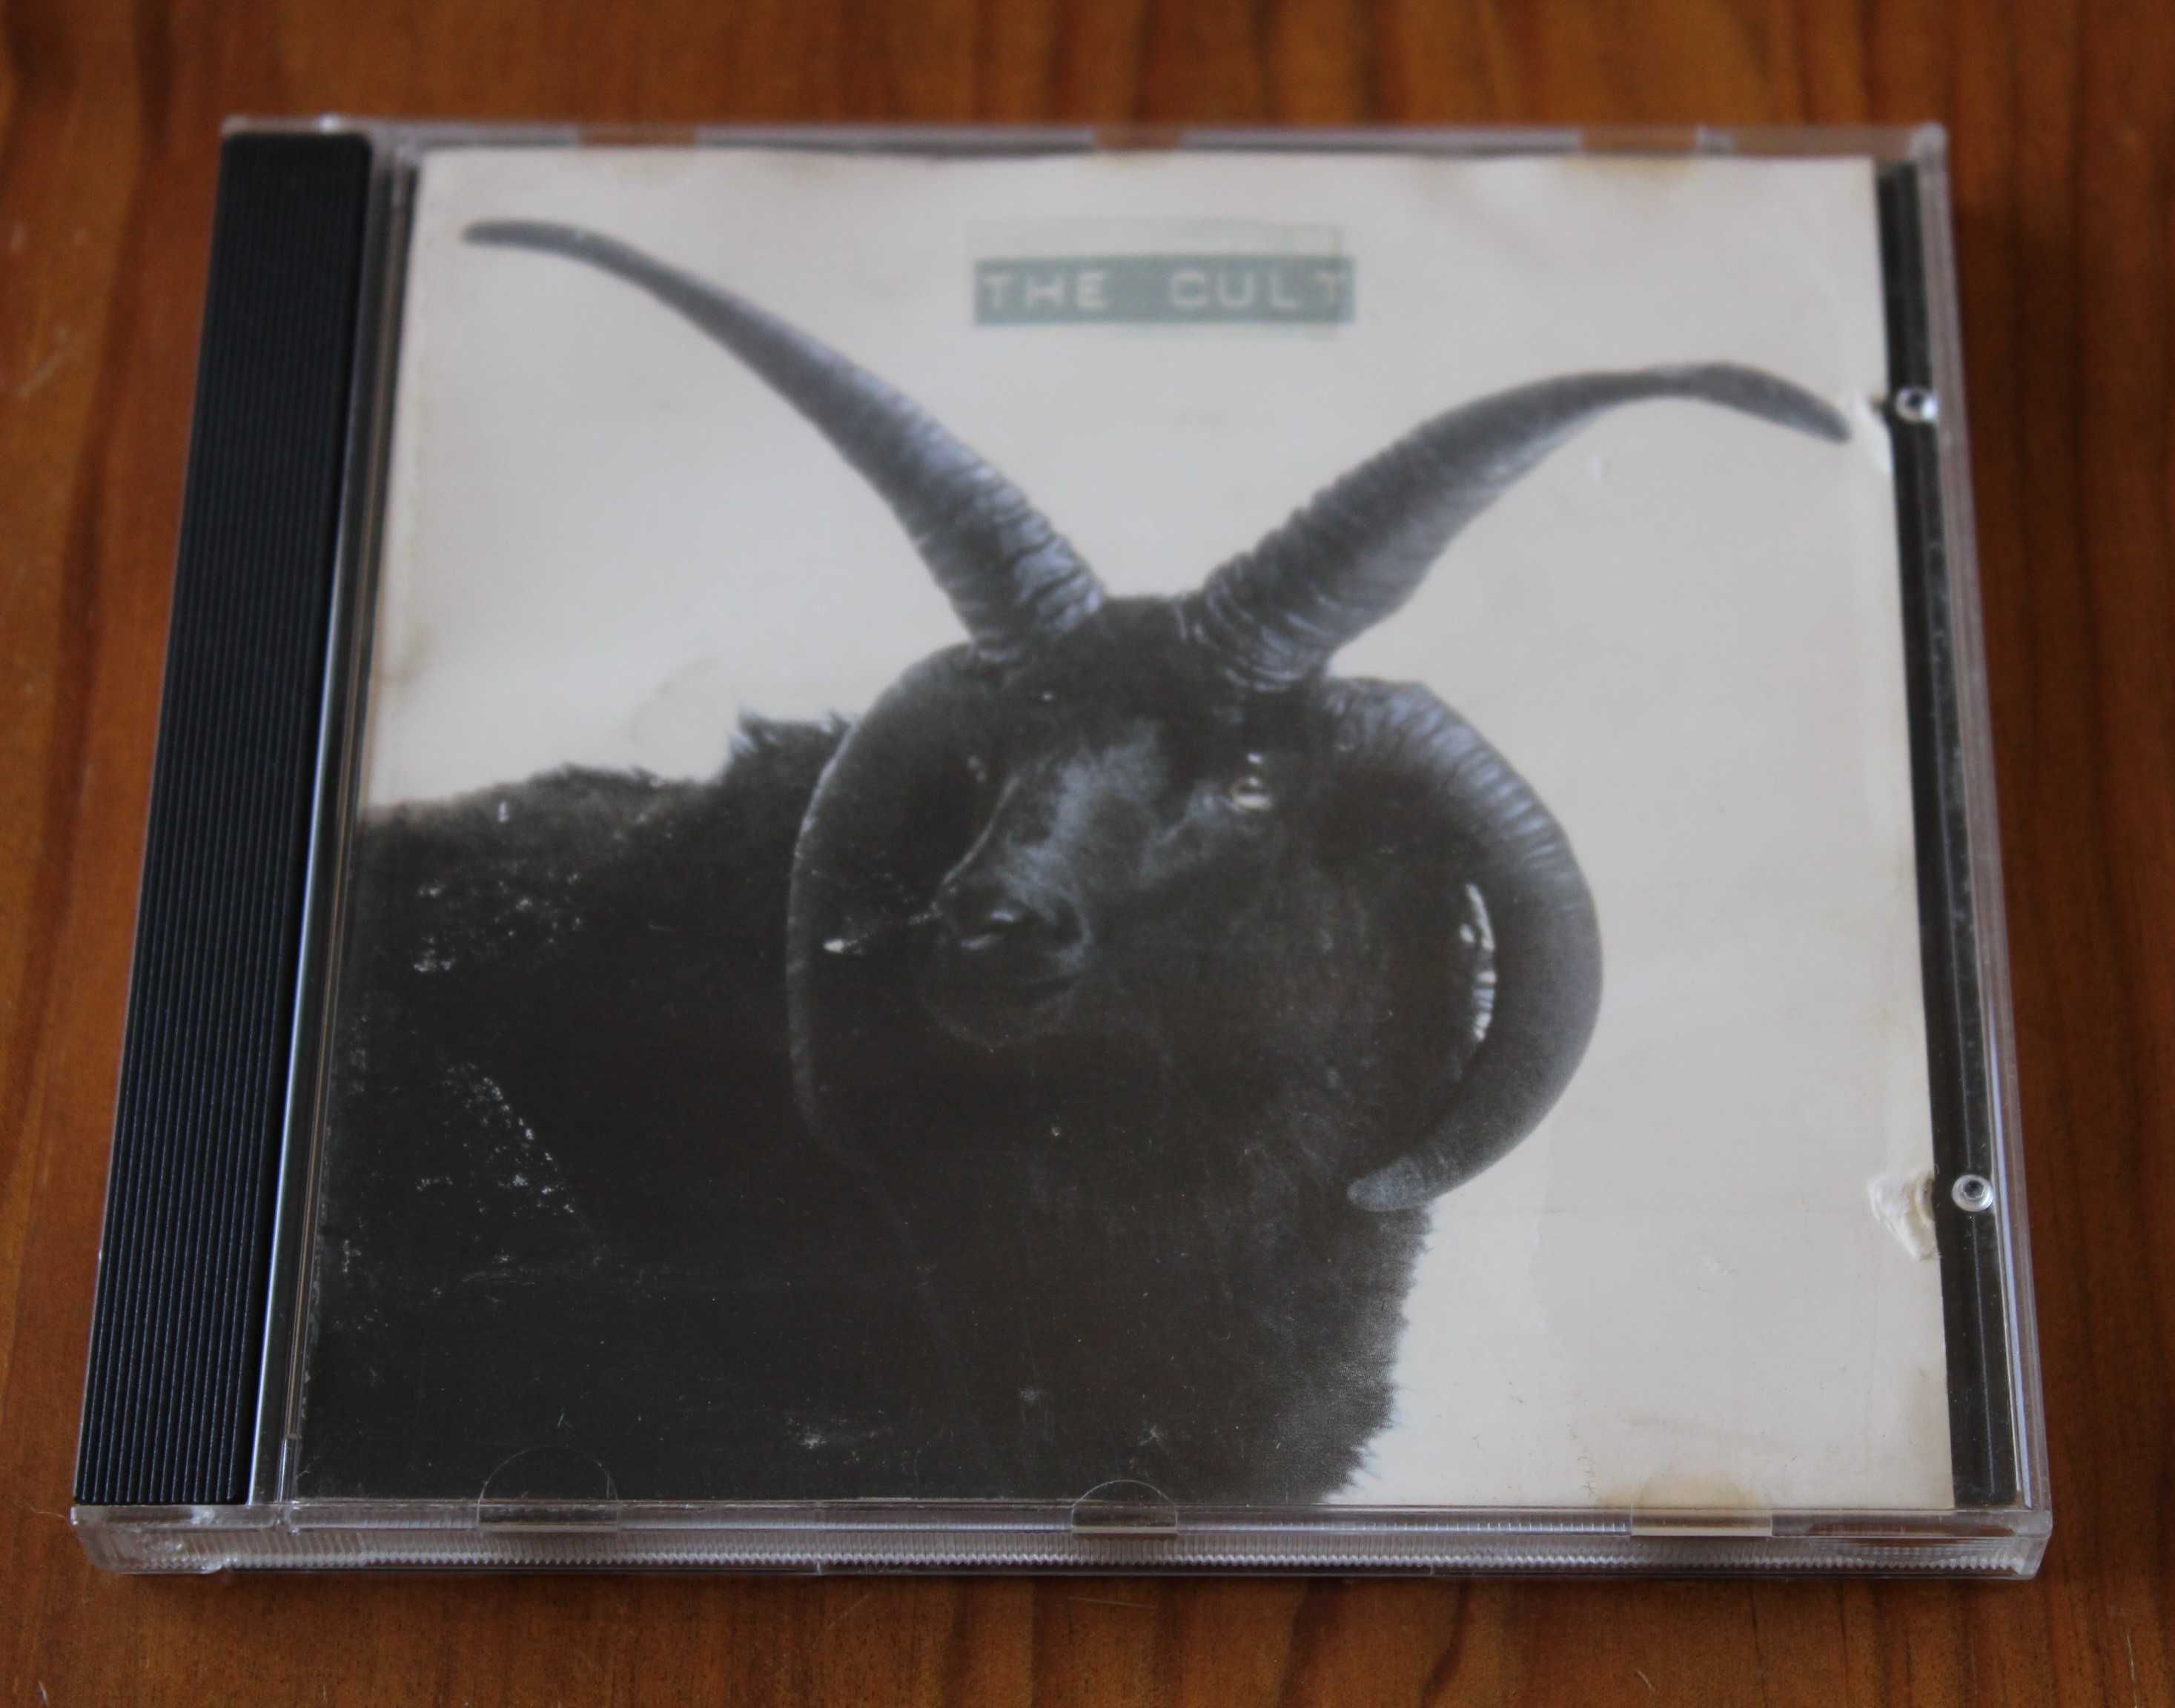 CD The Cult - The Cult (1994), capa danificada